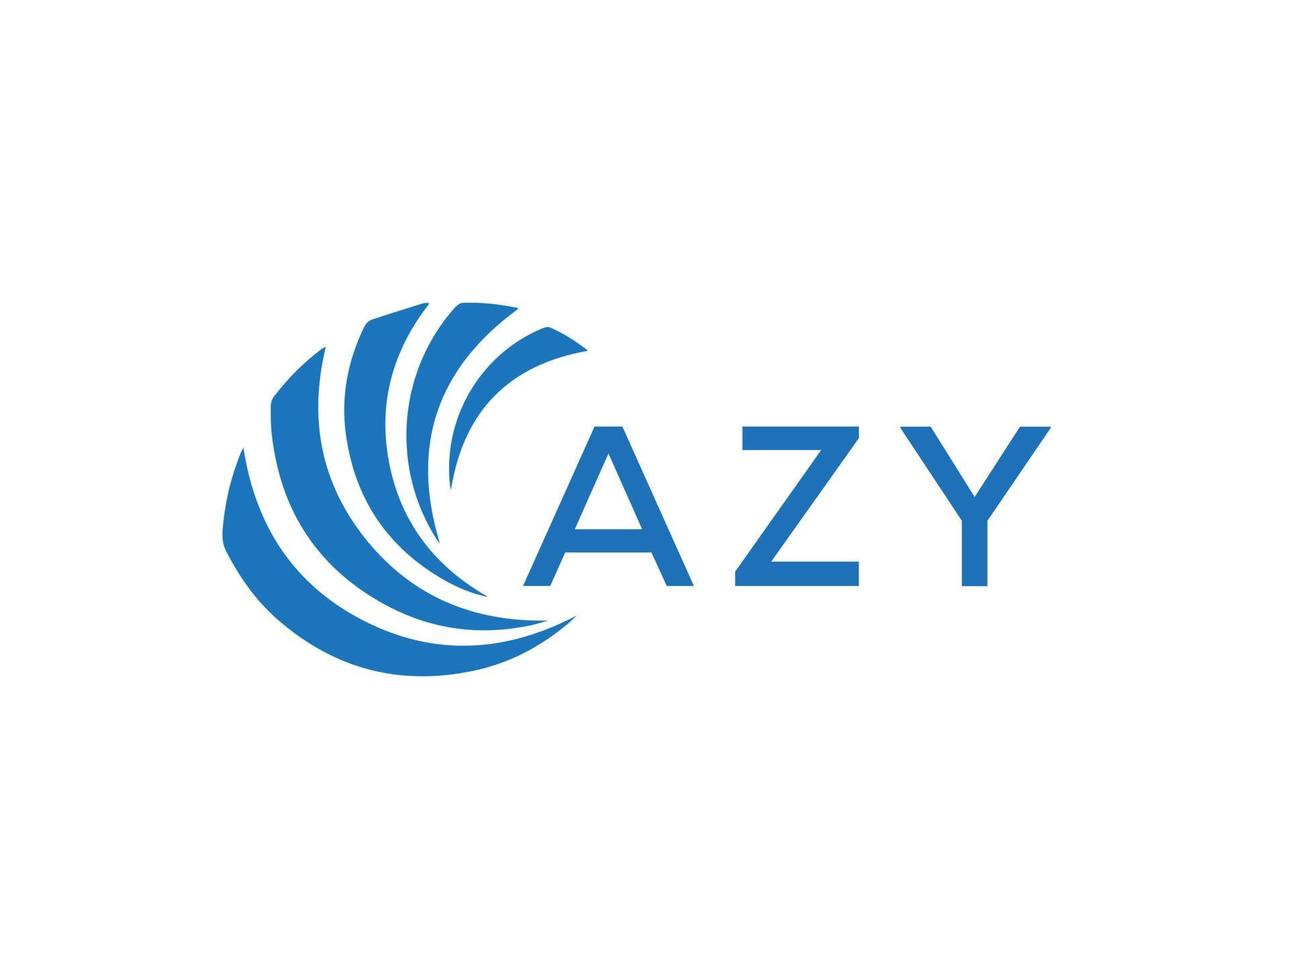 azy resumen negocio crecimiento logo diseño en blanco antecedentes. azy creativo iniciales letra logo concepto. vector